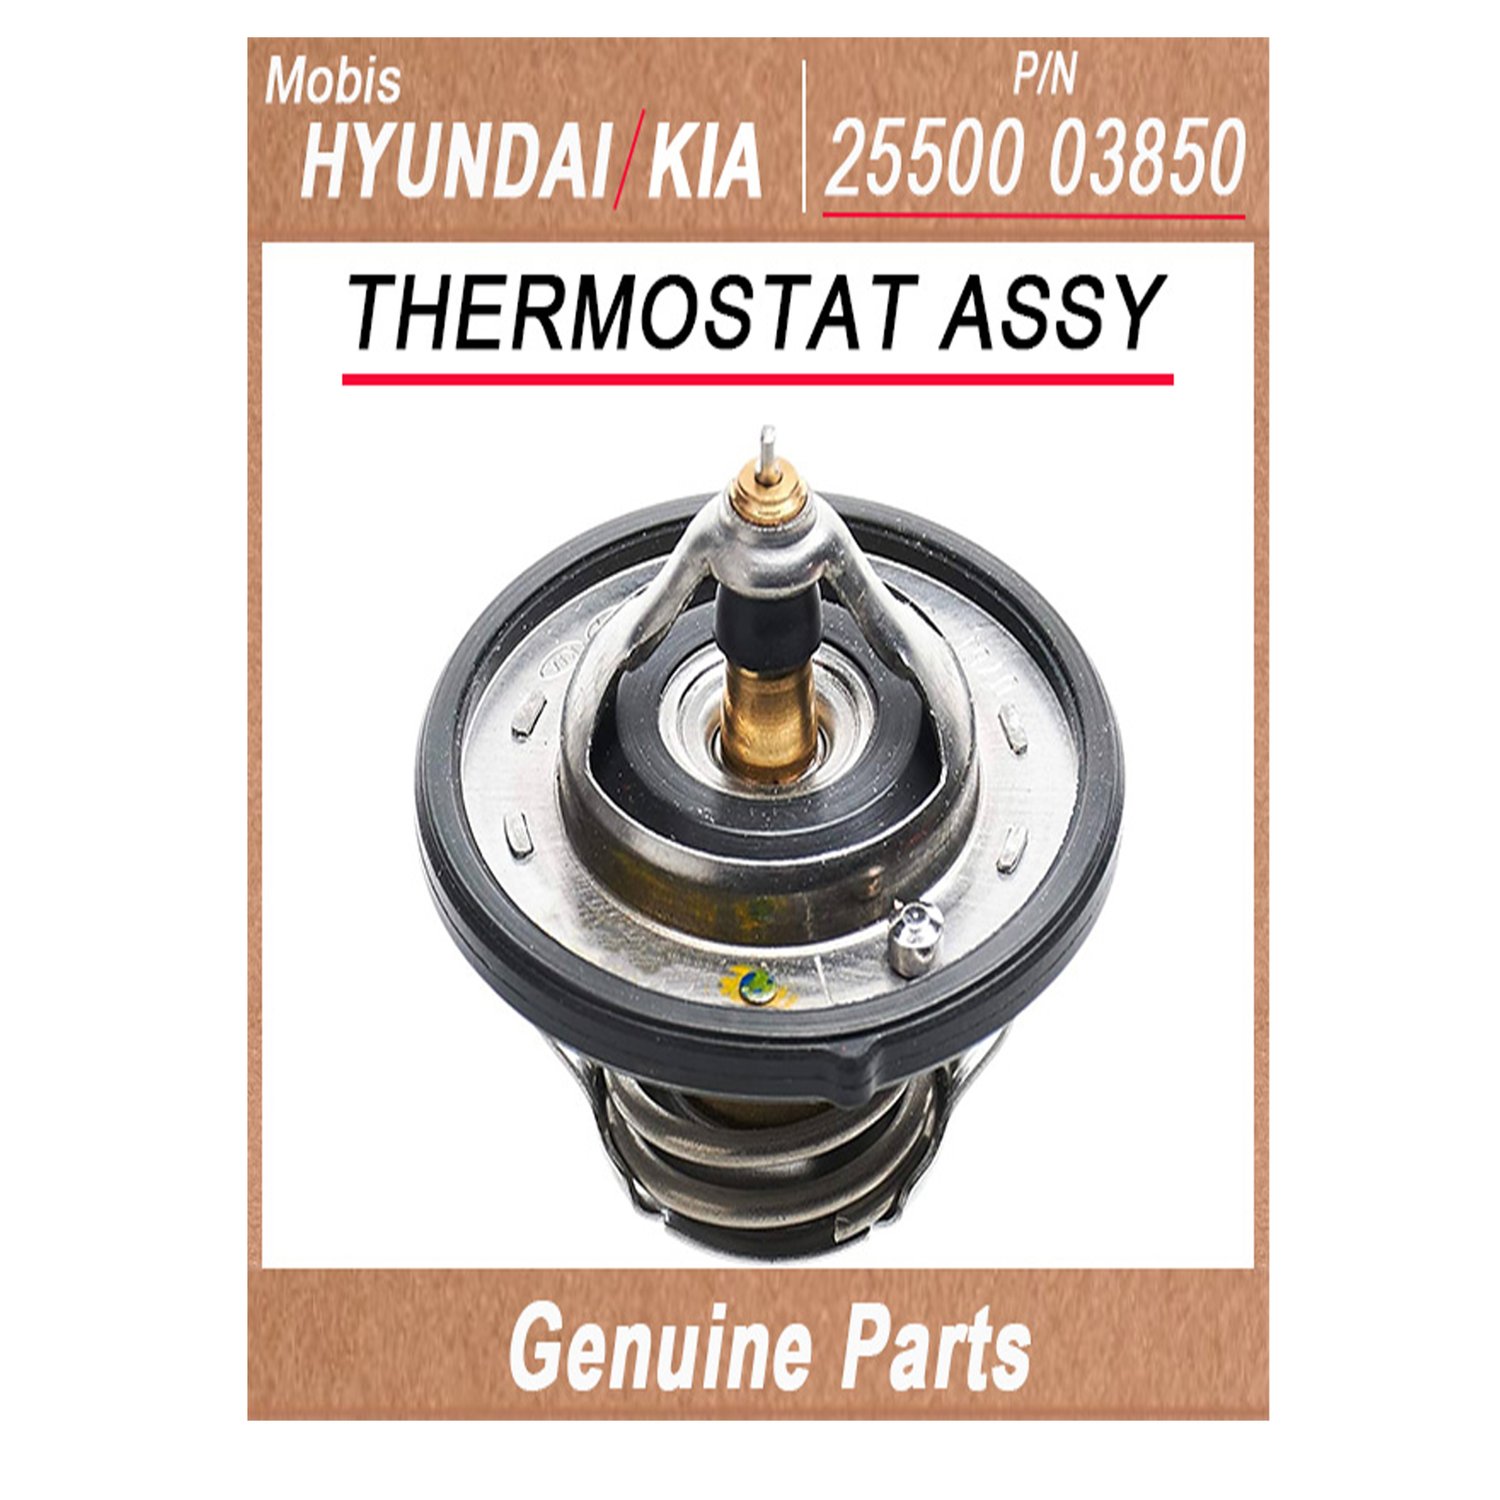 2550003850 _ THERMOSTAT ASSY _ Genuine Korean Automotive Spare Parts _ Hyundai Kia _Mobis_